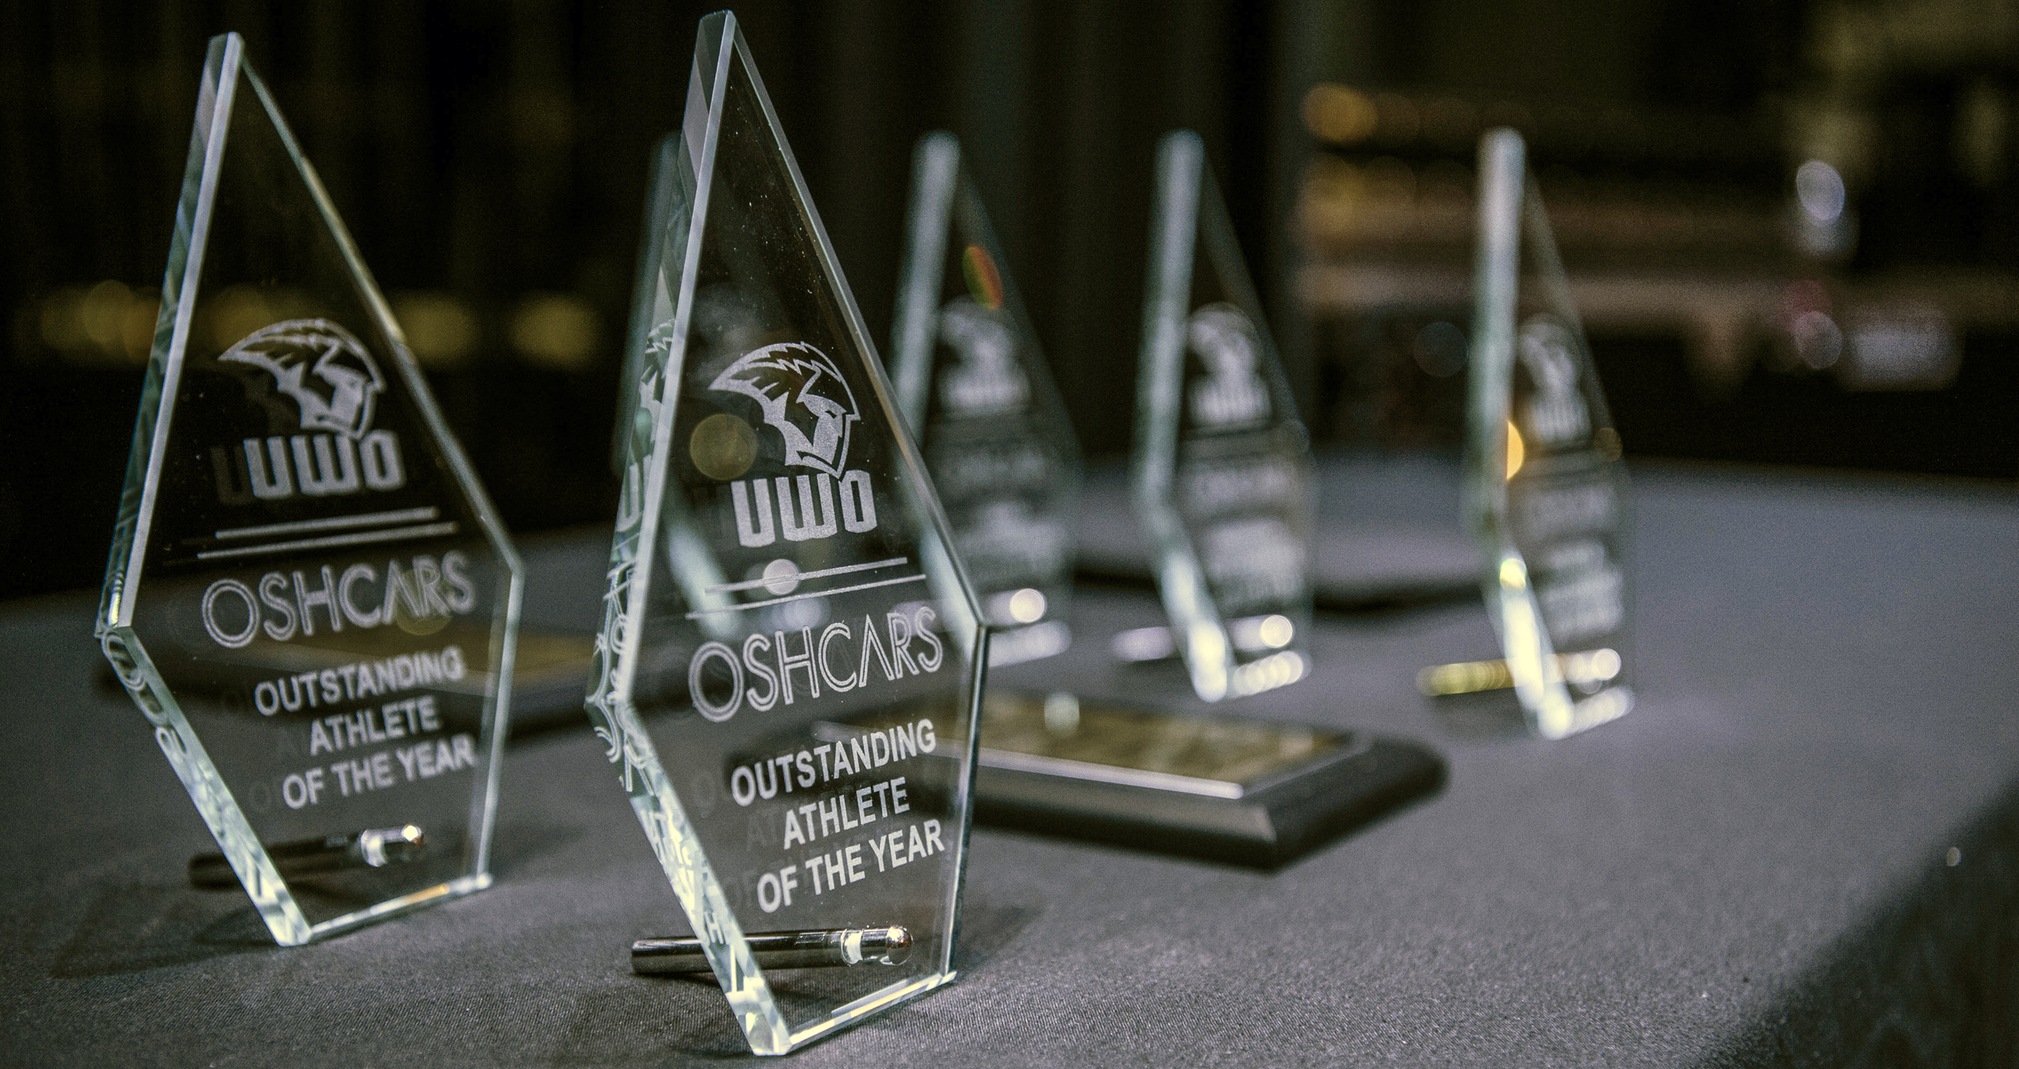 Third Annual Oshcars Award Winners Announced